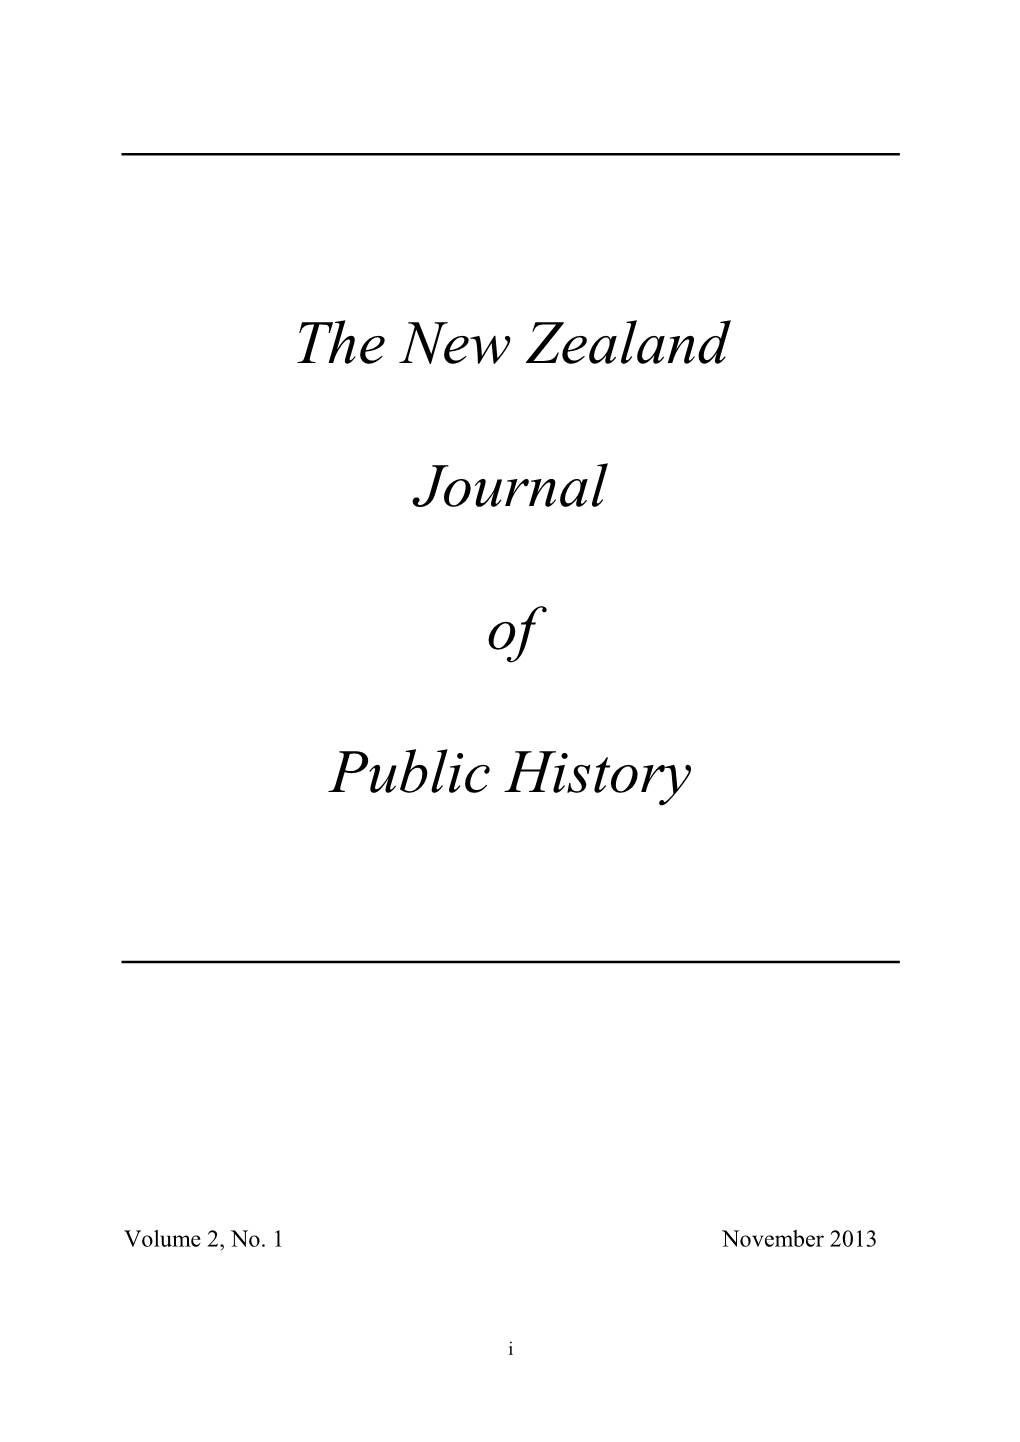 The New Zealand Journal of Public History Is an Occasional Journal Published by the Public History Research Unit (PHRU), University of Waikato